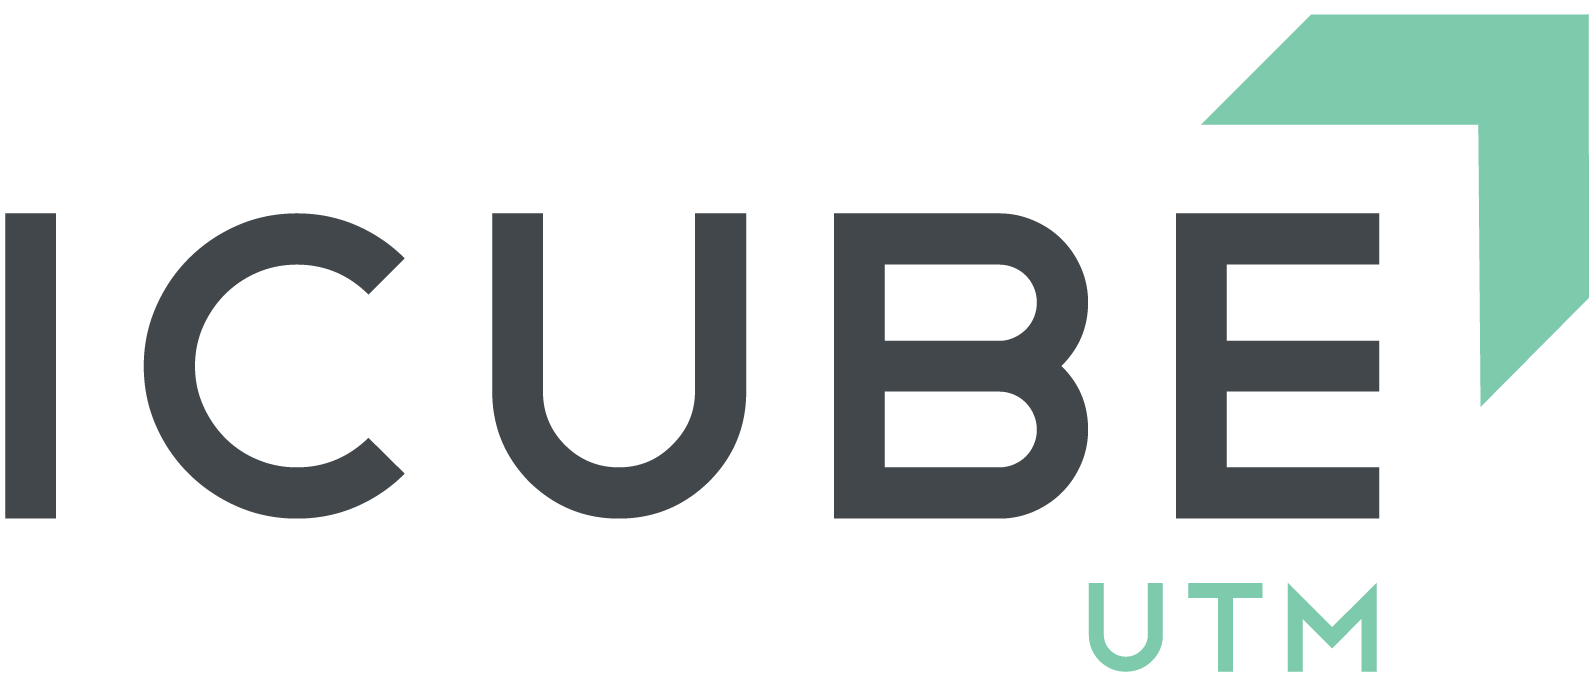 UTM Logo - The ICUBE Brand